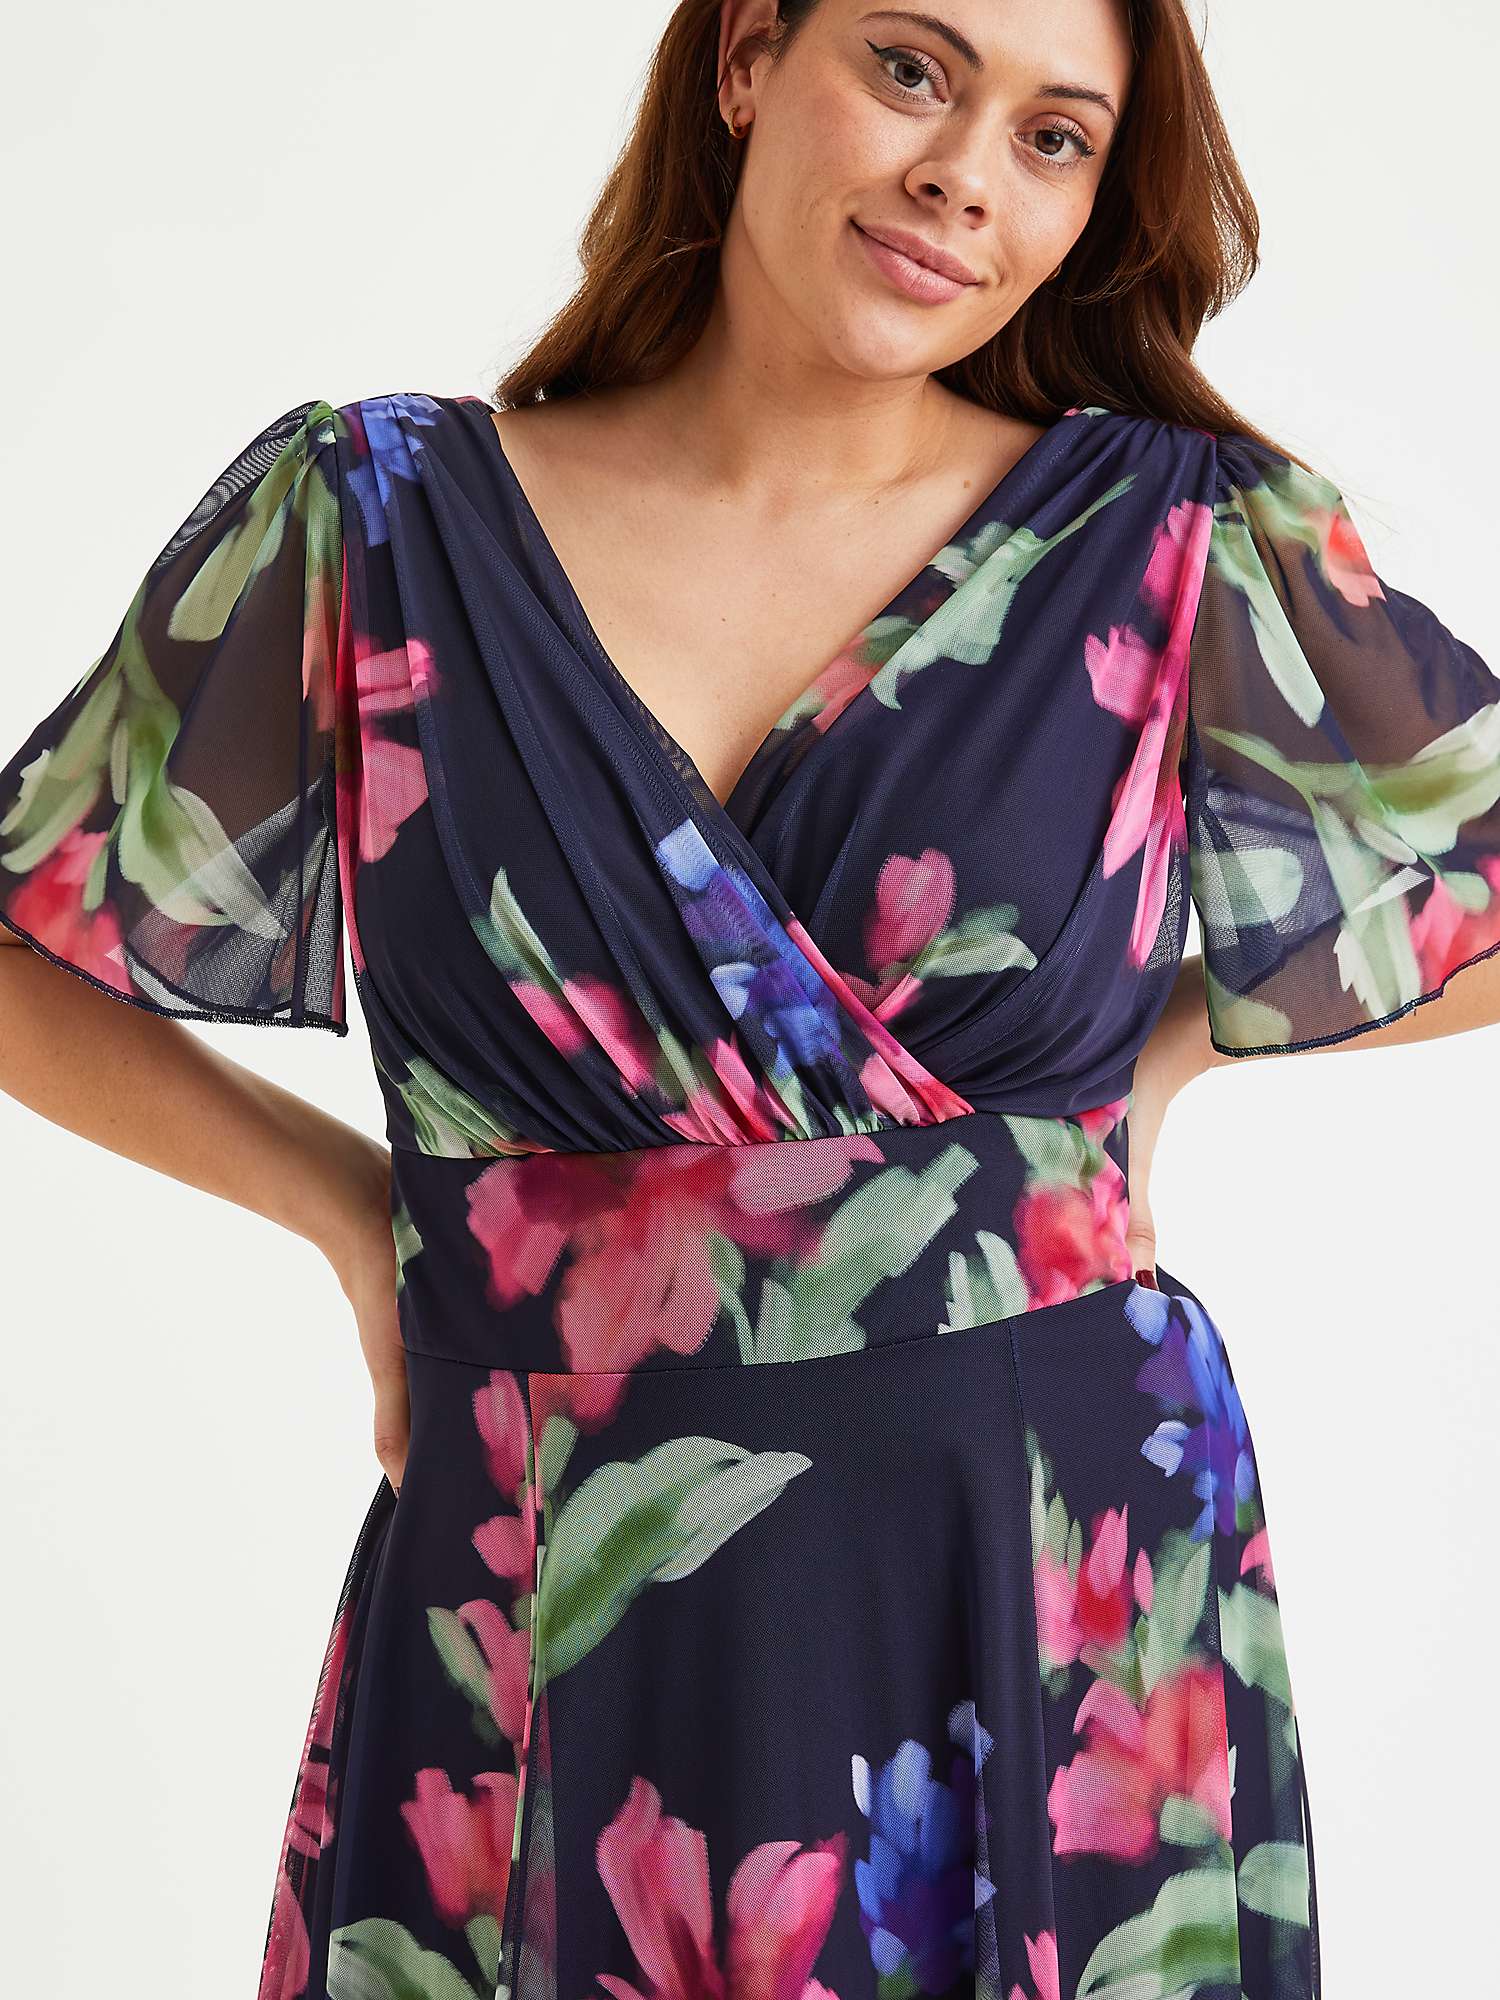 Buy Scarlett & Jo Isabelle Floral Maxi Dress, Navy/Pink Online at johnlewis.com